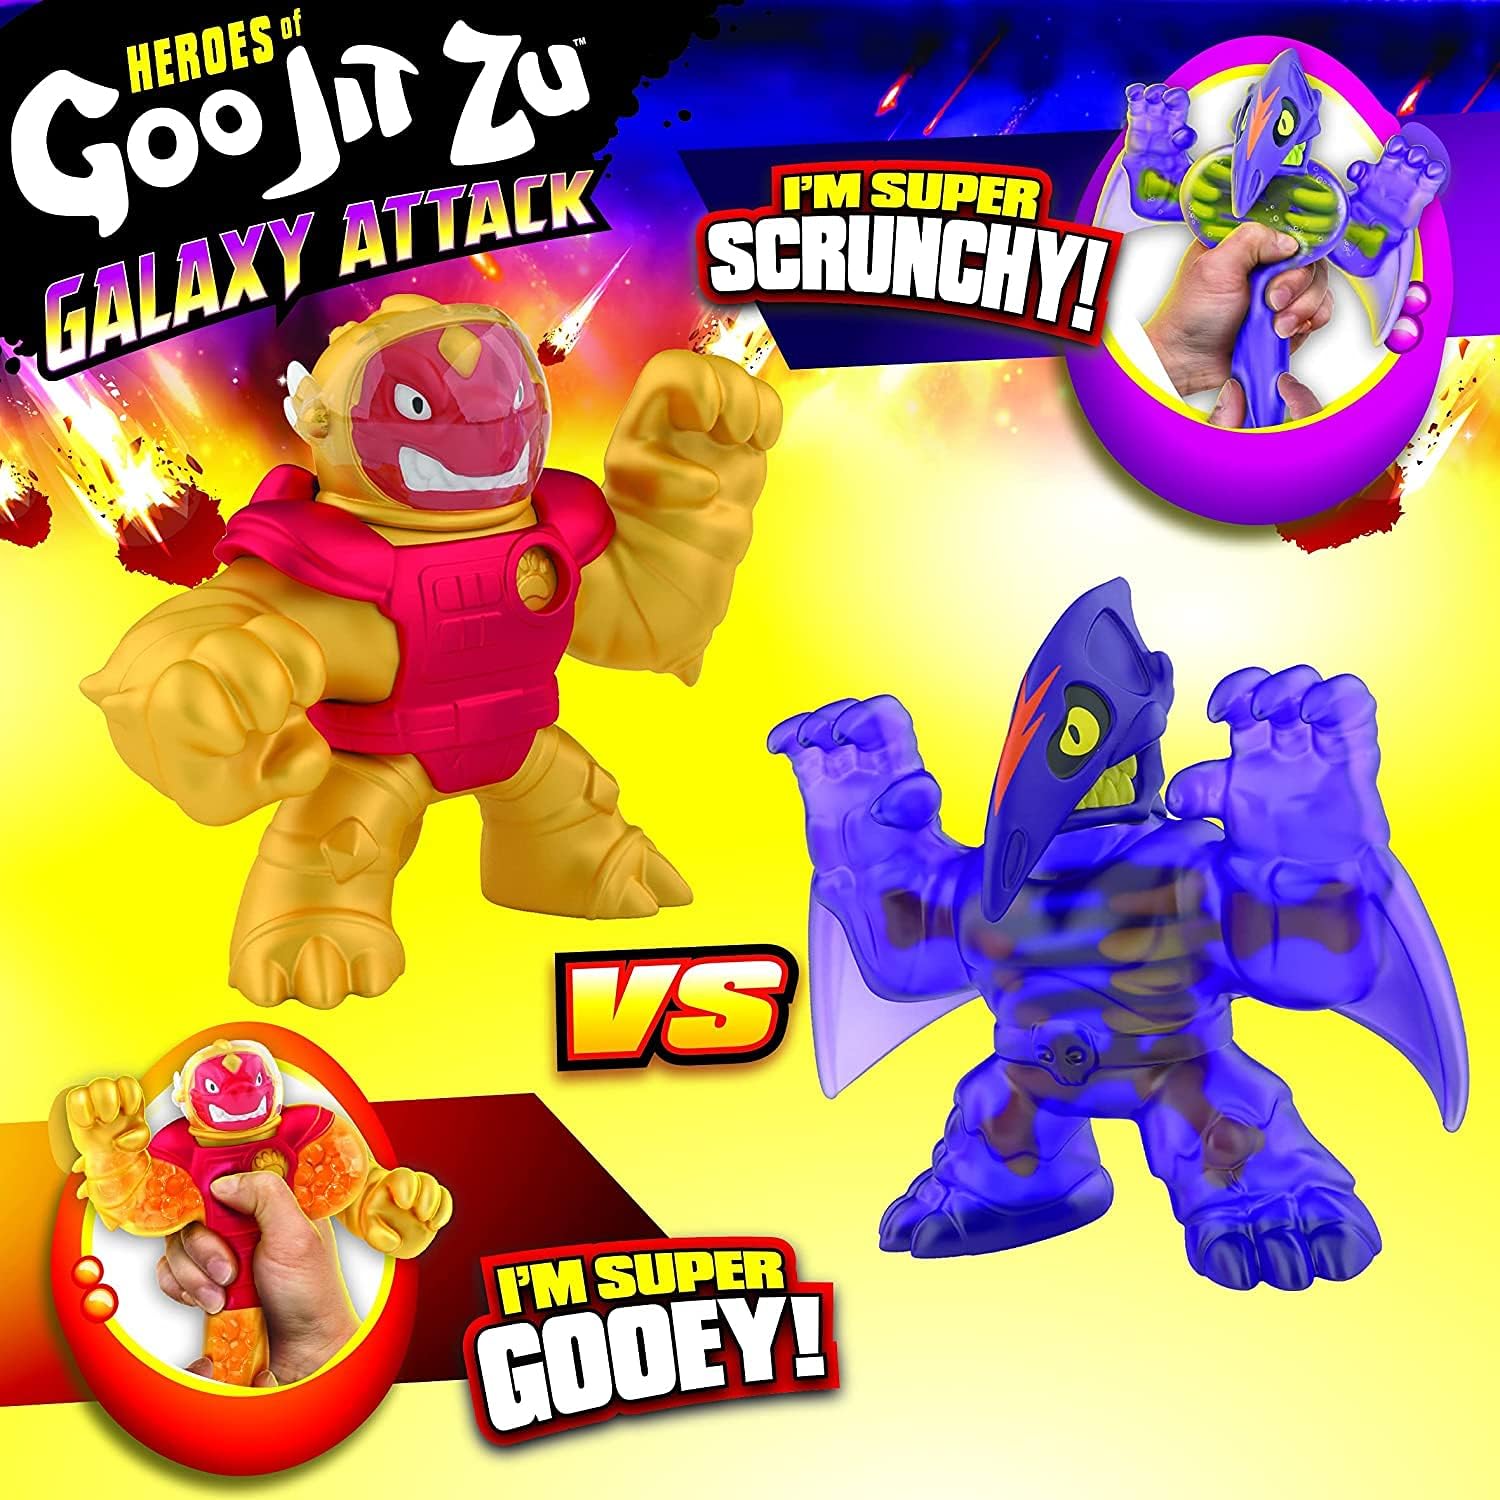 Heroes of Goo Jit Zu Galaxy Attack S5 Versus PK, Multicolor (41169)